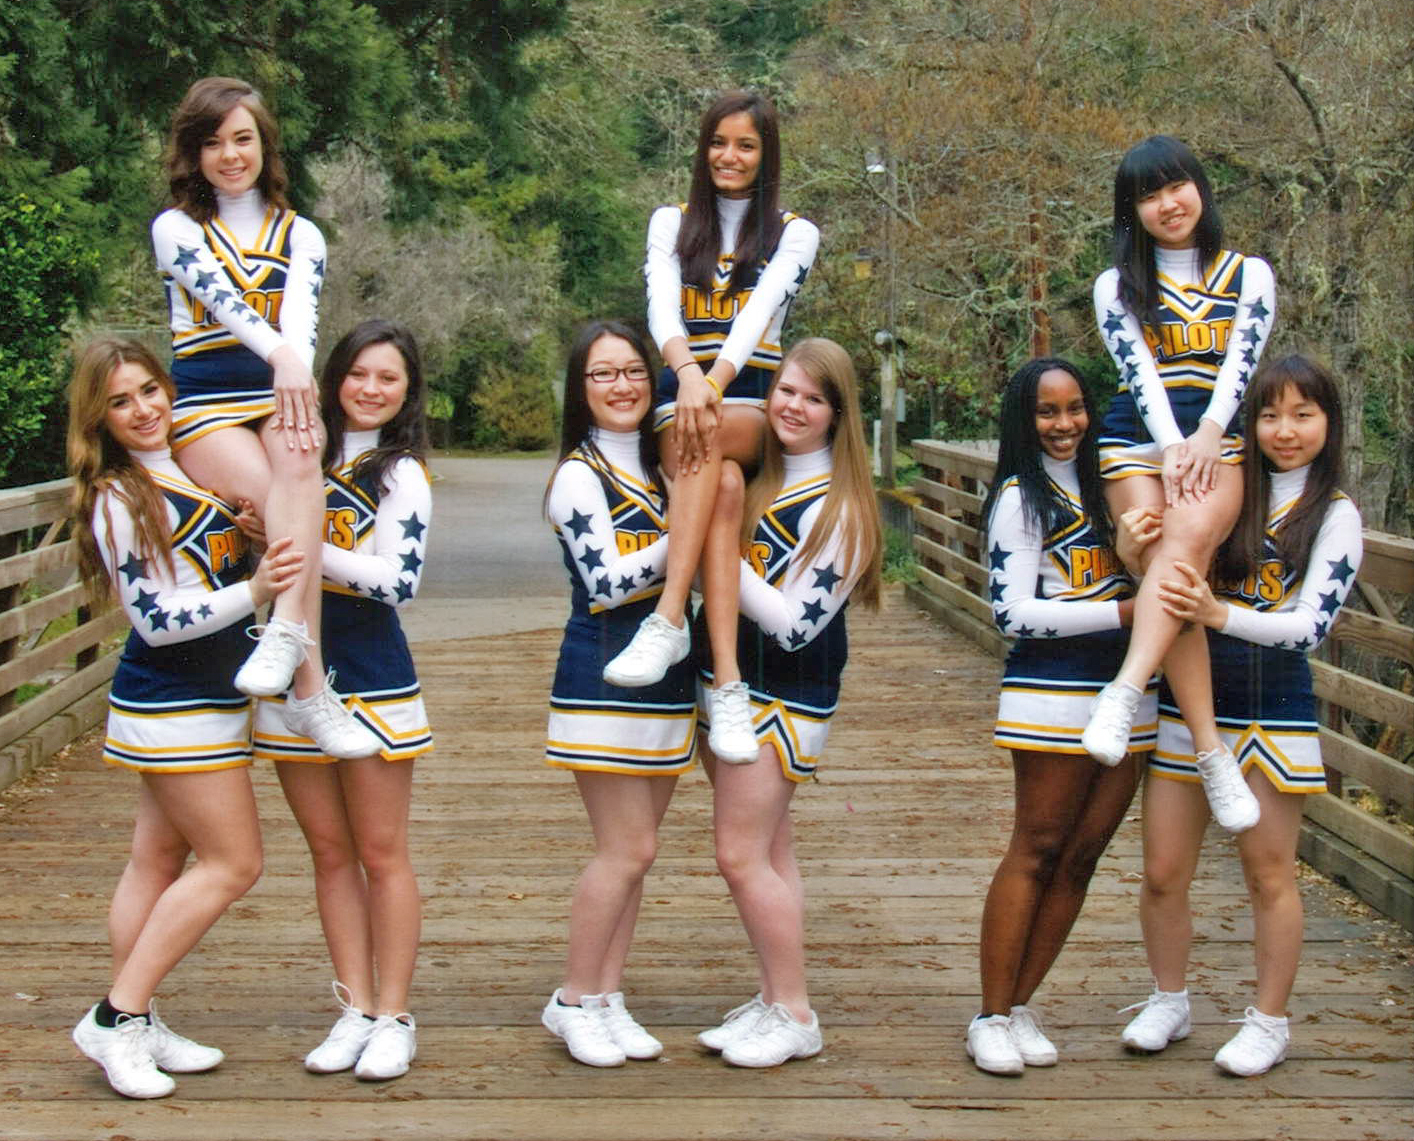 Canyonville Christian Academy cheerleaders.